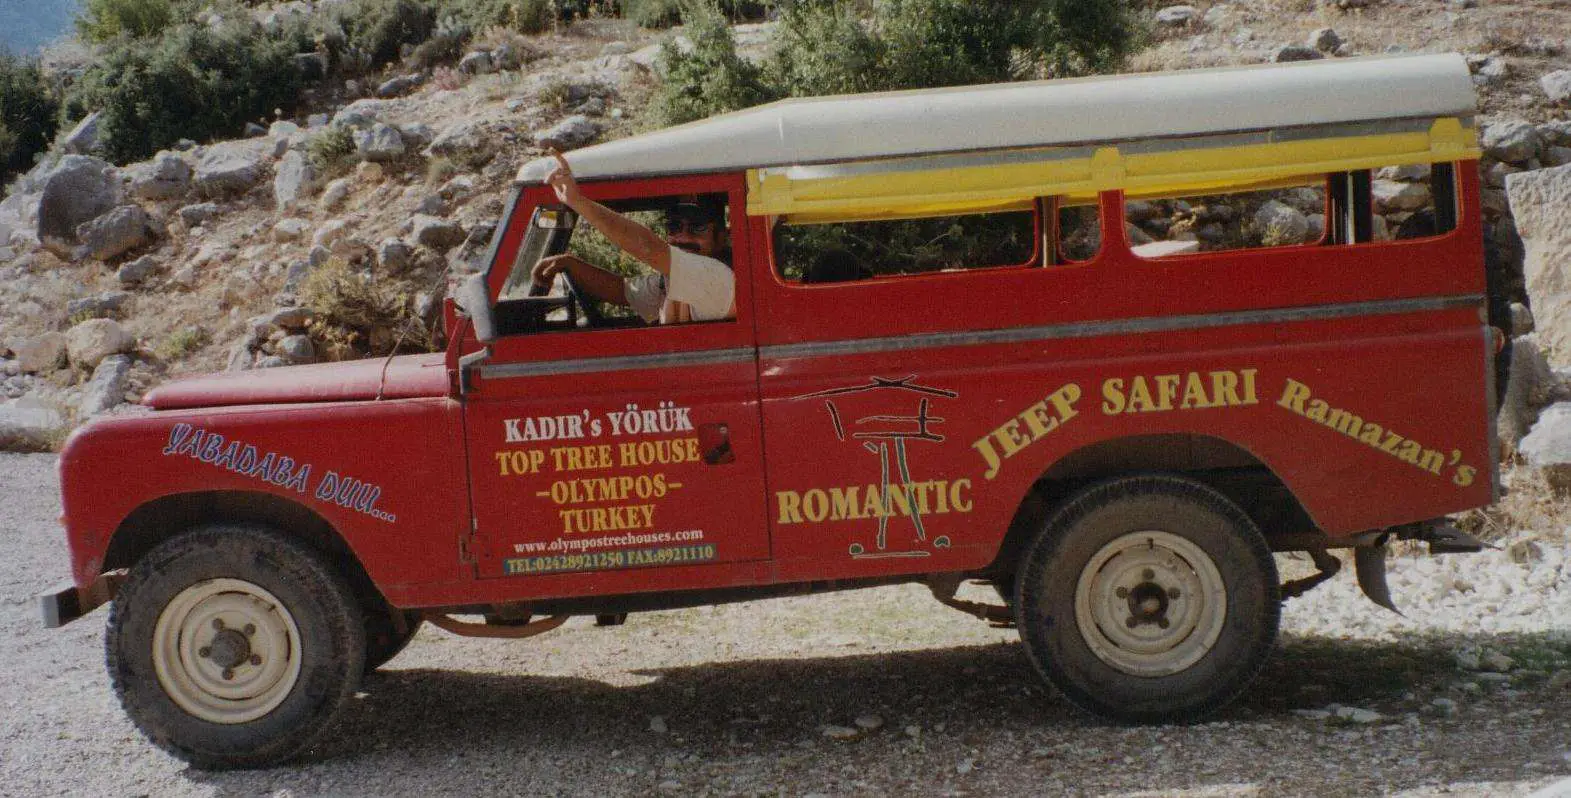 Copy Of Turkey0010 | Turkey Travel Blog | Ramazan'S 'Romantic' Jeep Safaris And Tours. The Most Bizarre (And Fun) Trip I'Ve Been On. | Turkey Travel Blog | Author: Anthony Bianco - The Travel Tart Blog